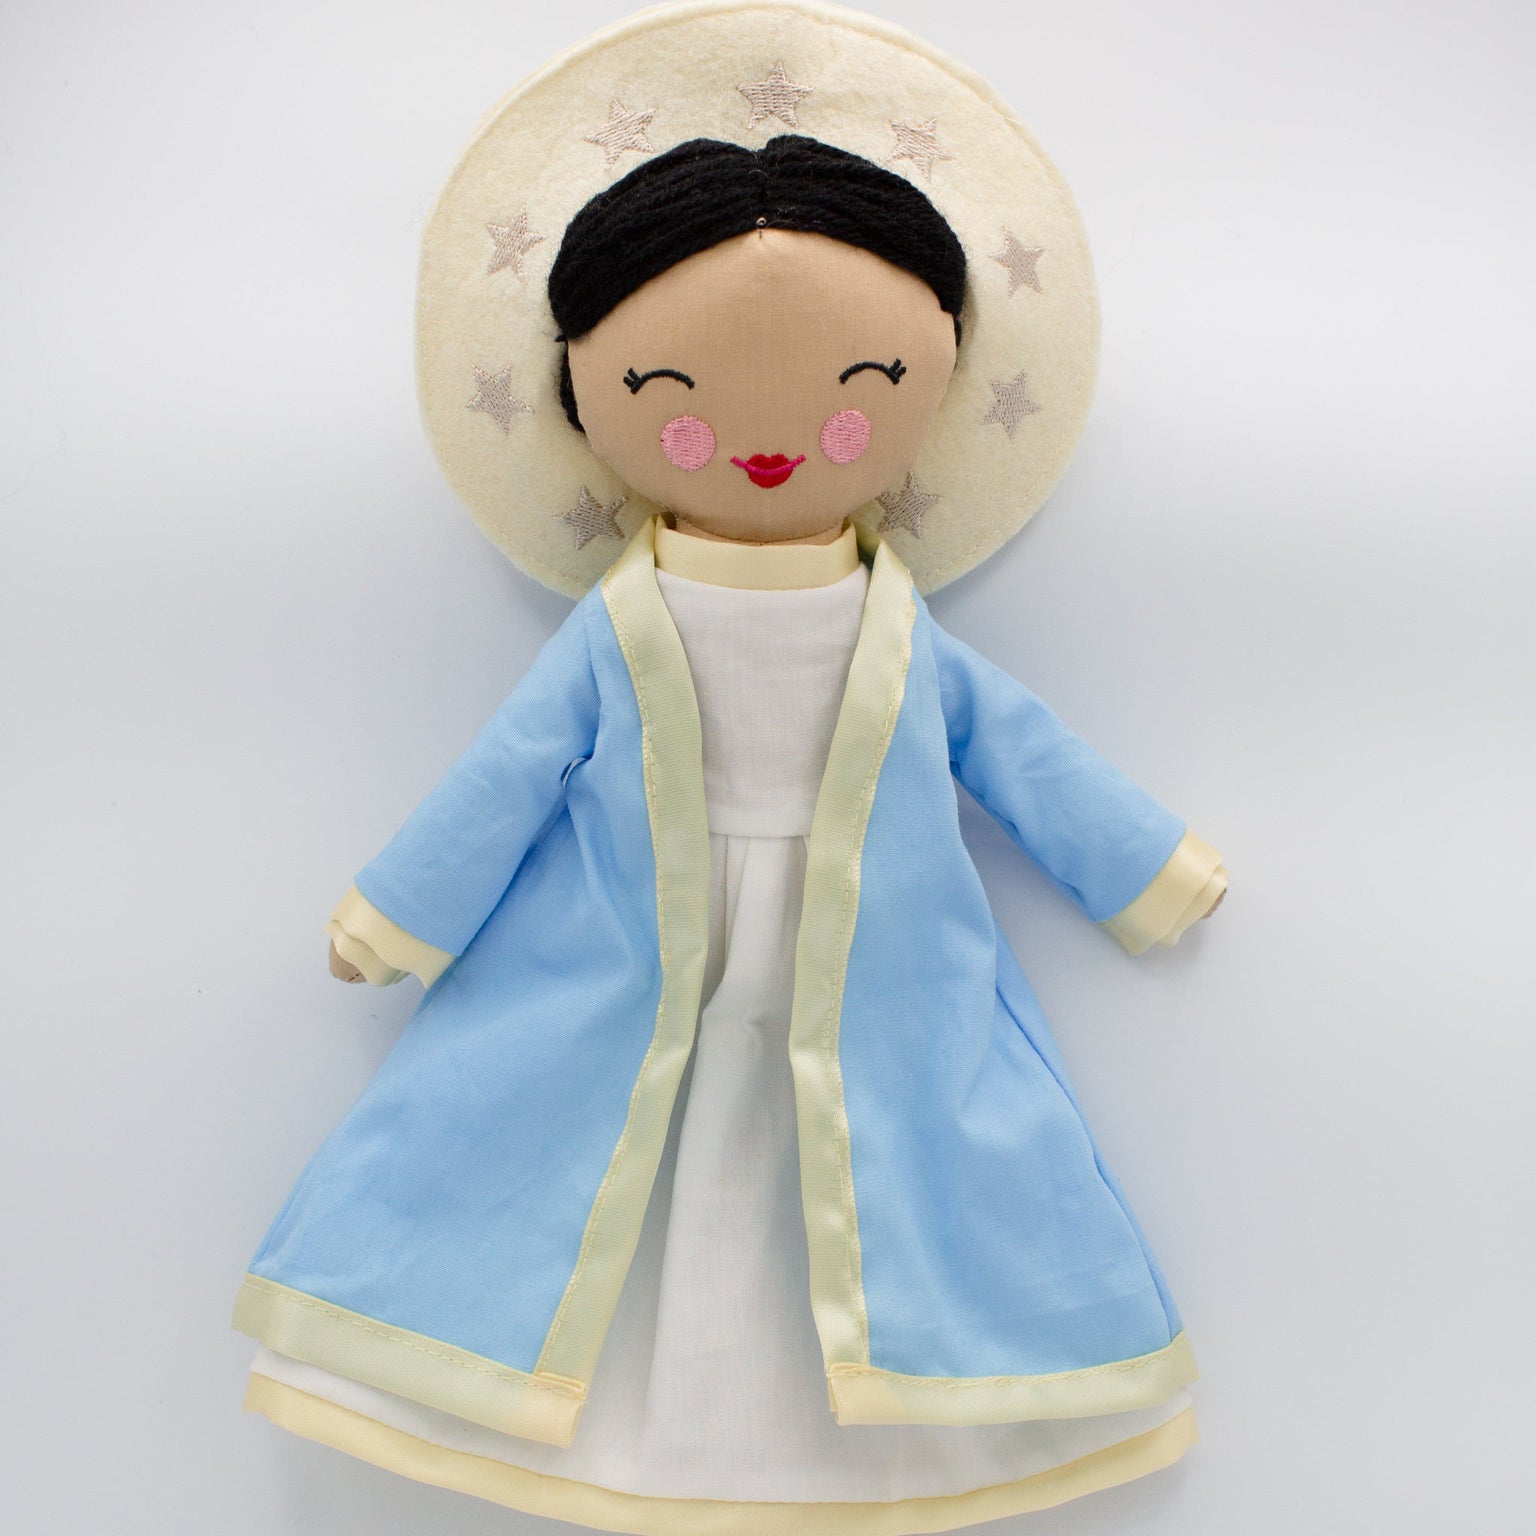 Our Lady of La Vang Rag Doll